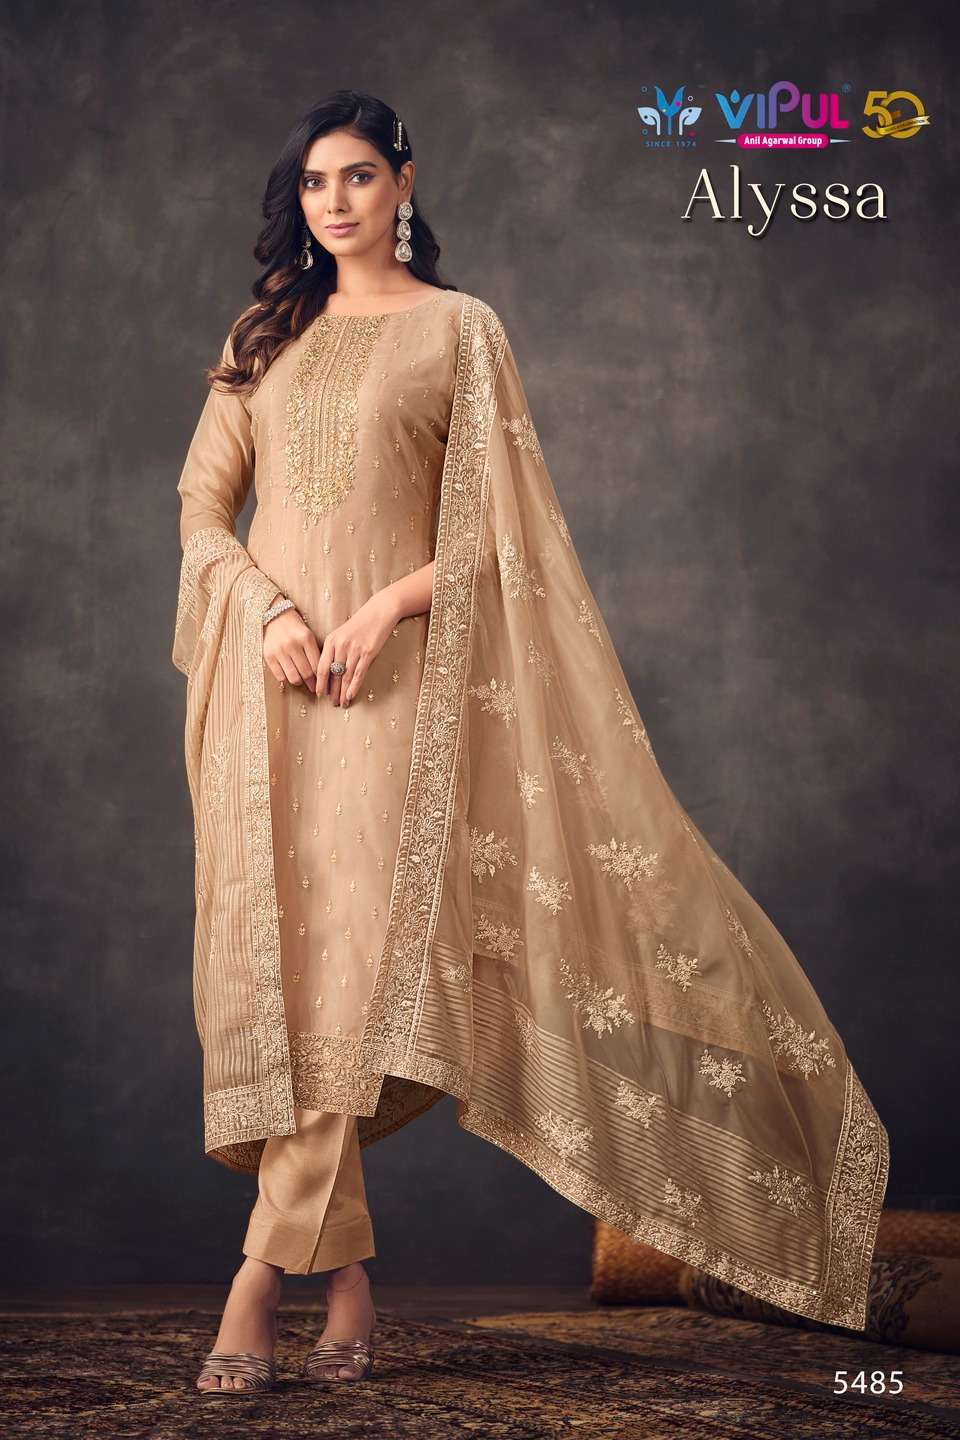 vipul fashion alyssa 5481-5486 series latest designer straight cut salwar kameez wholesaler surat gujarat